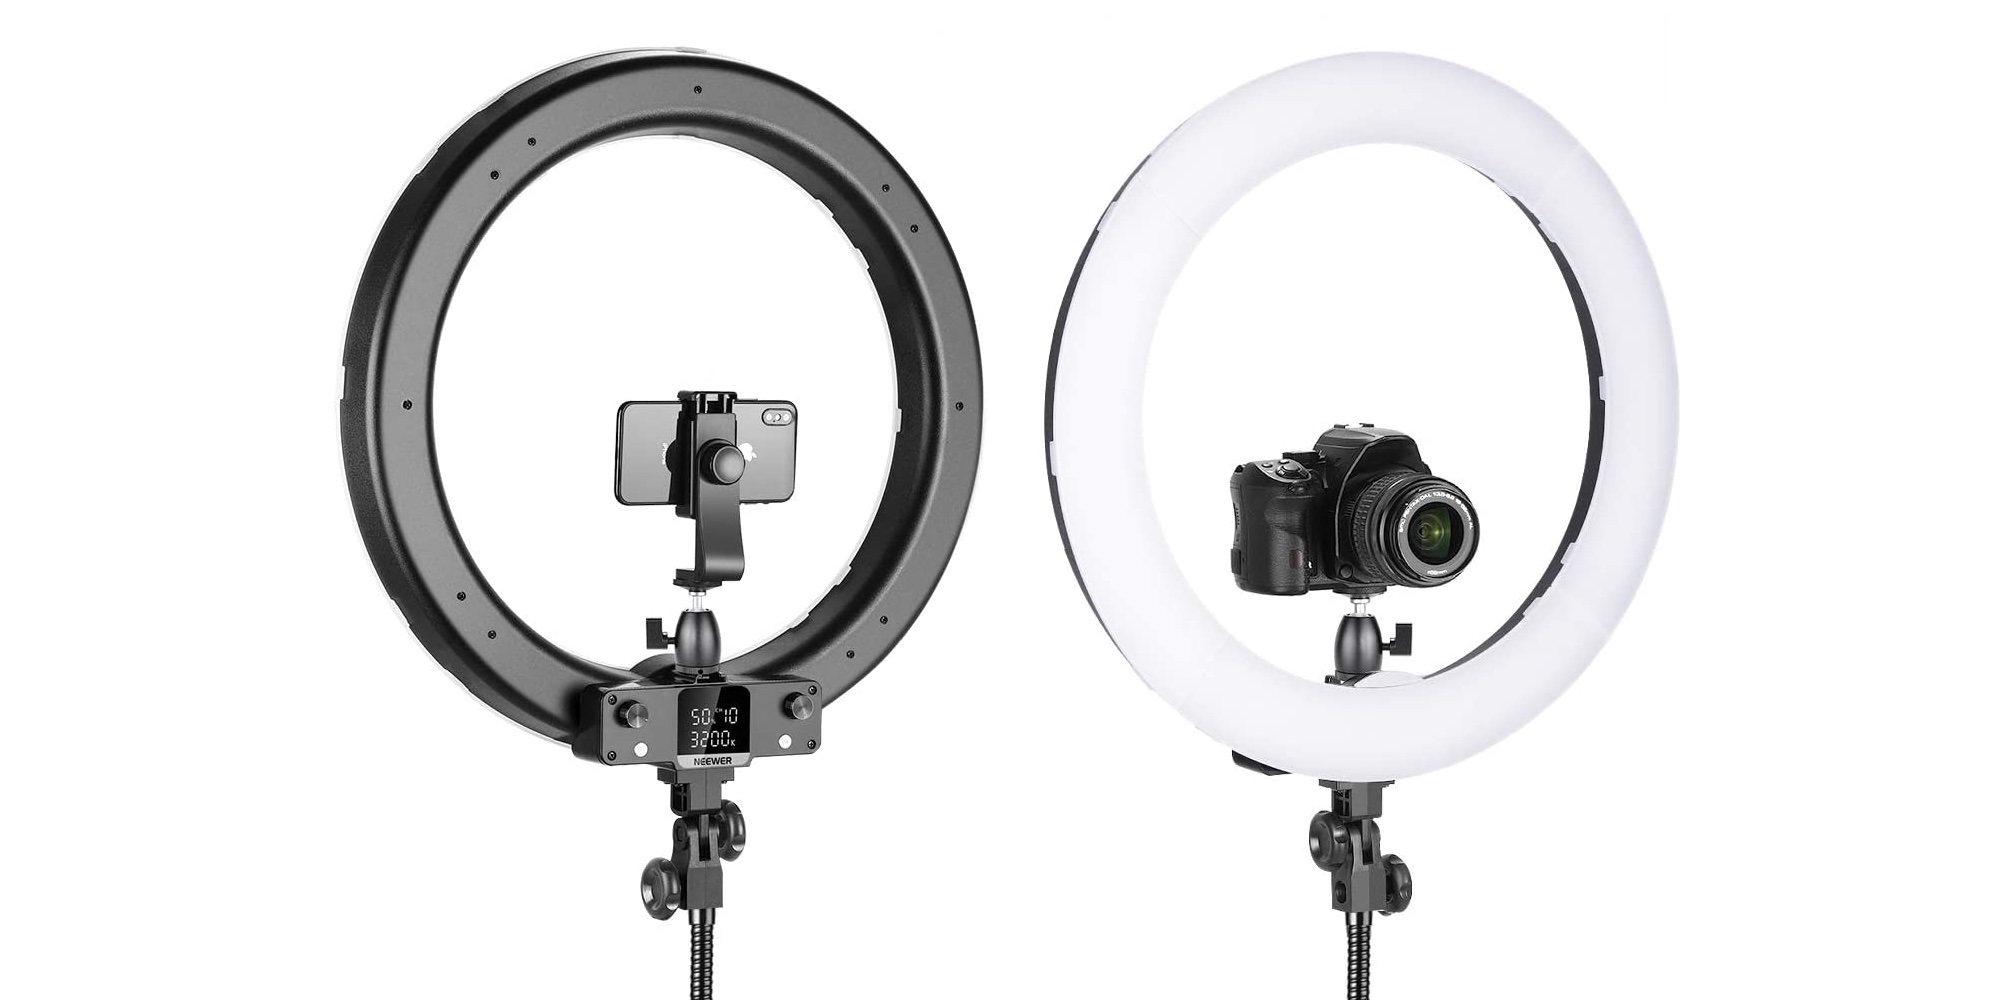 Empirisch Wegrijden Milieuactivist Upgrade your photography setup with Neewer ring lights and accessories from  $18